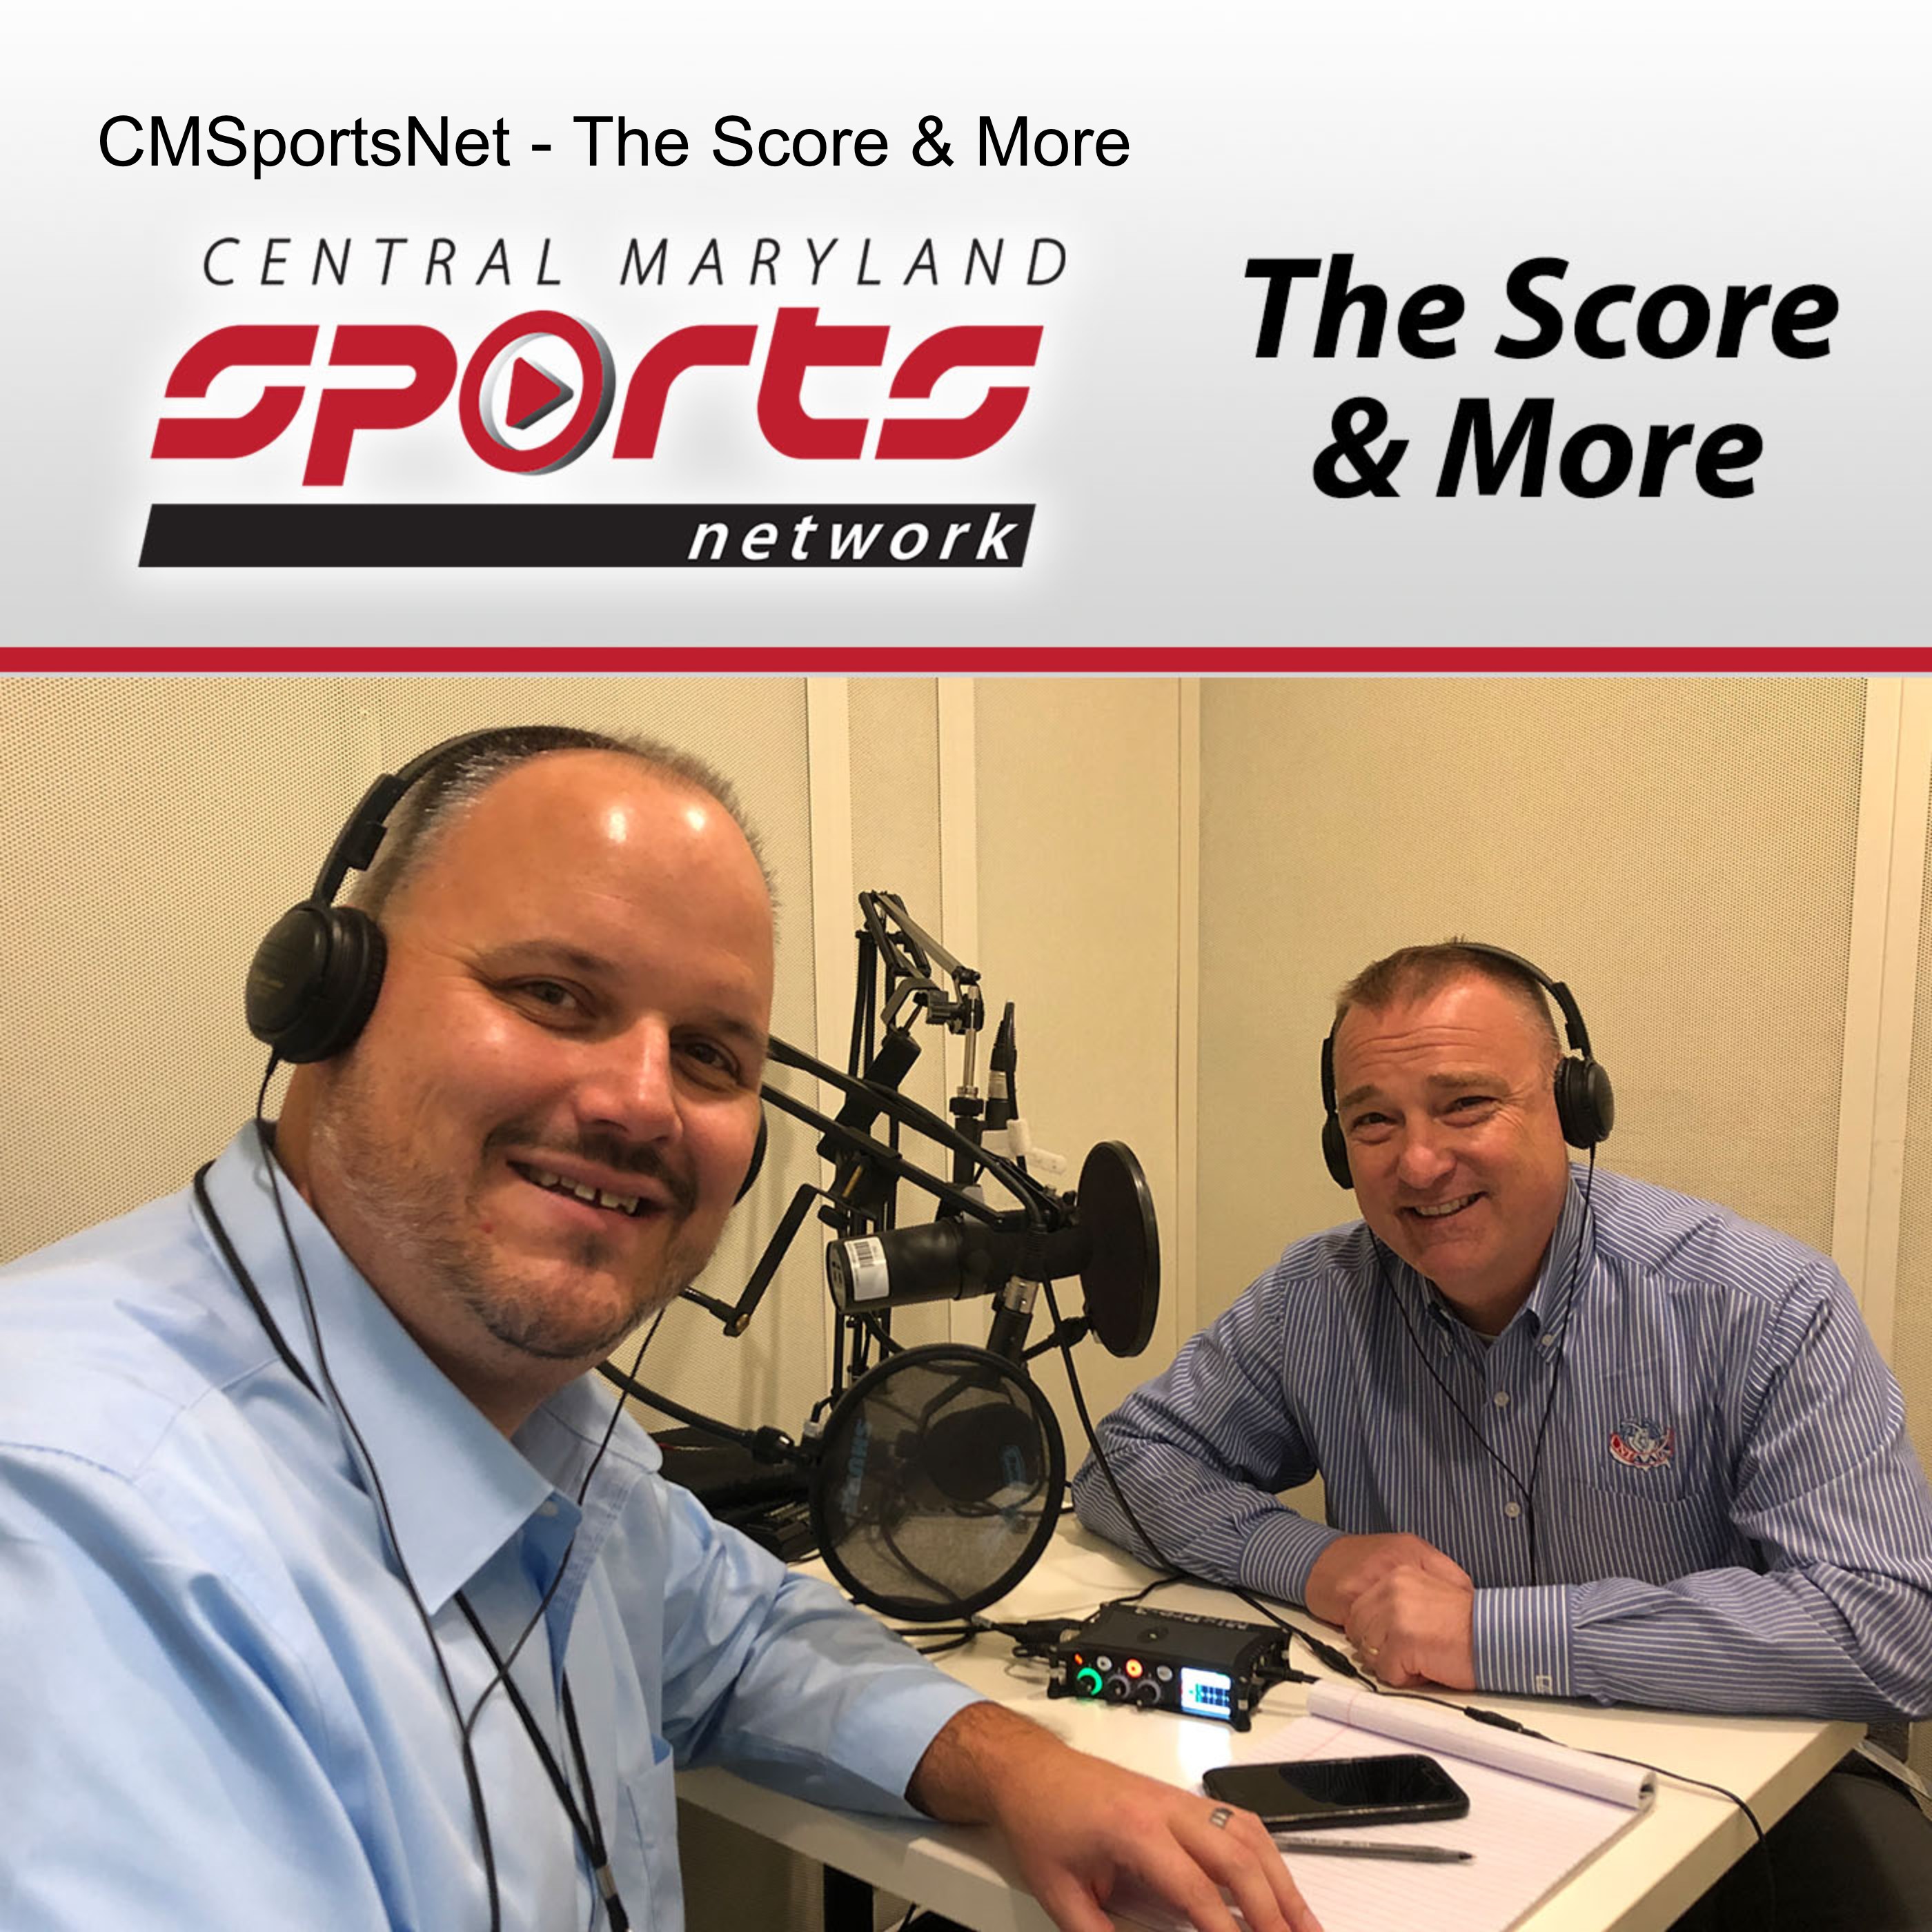 CMSportsNet - The Score & More